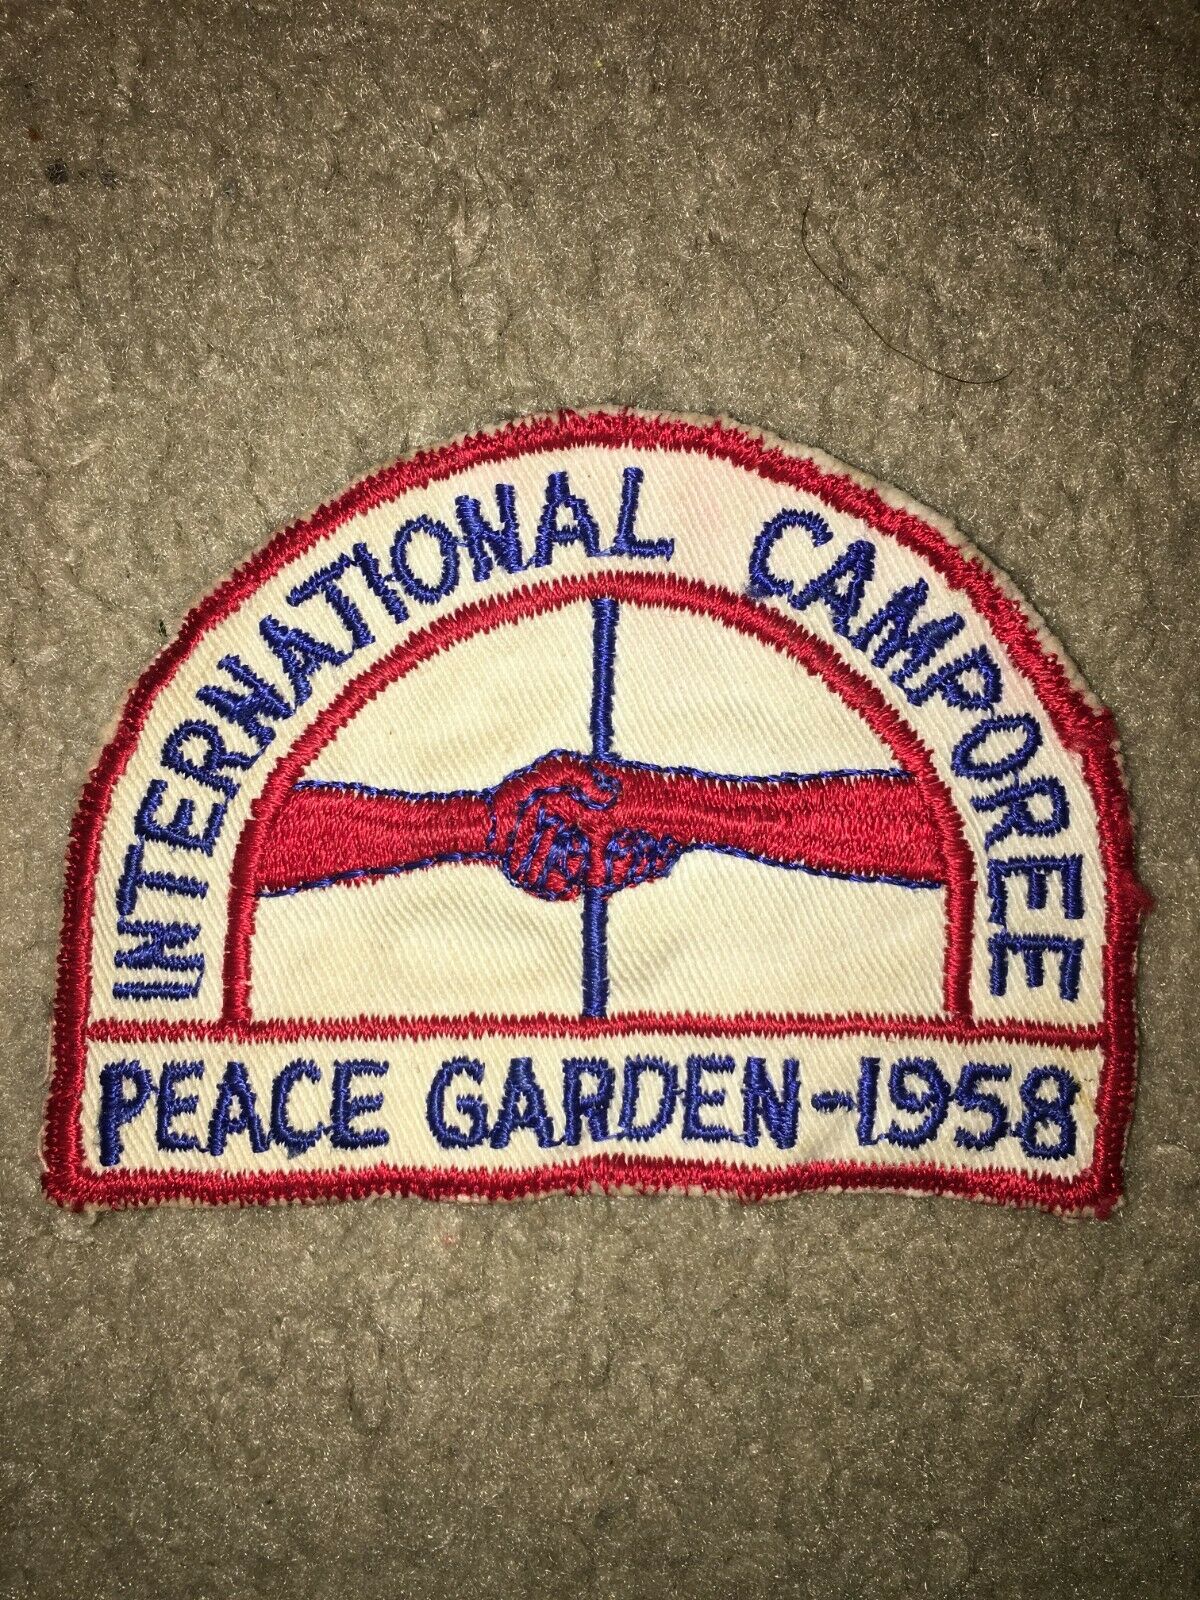 Boy Scout Bsa 1958 Peace Garden Camporee Lake Agassiz Council North Dakota Patch